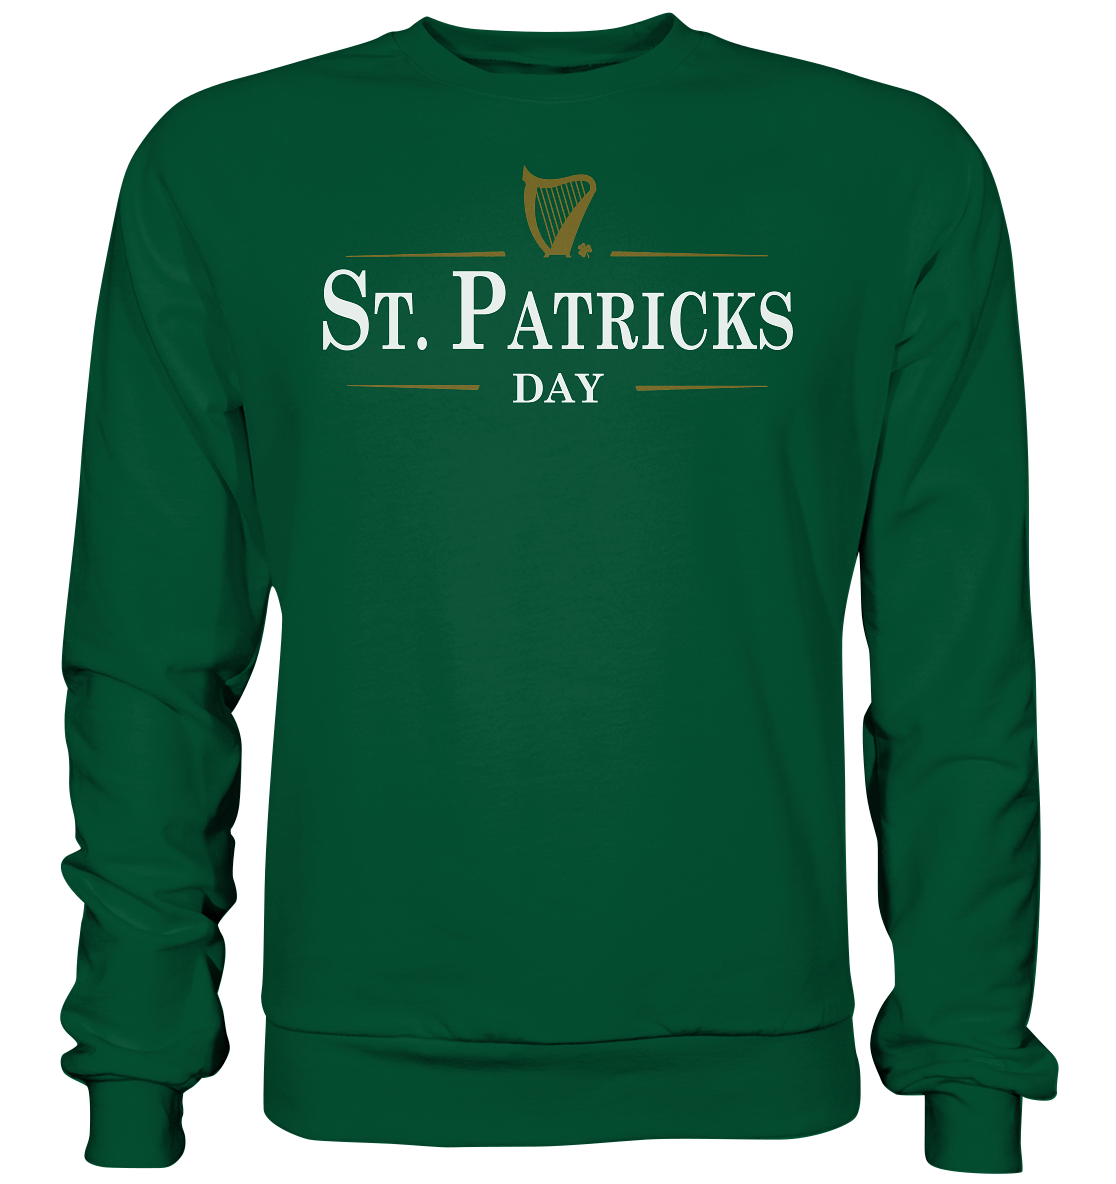 St. Patricks Day "Stout" - Basic Sweatshirt